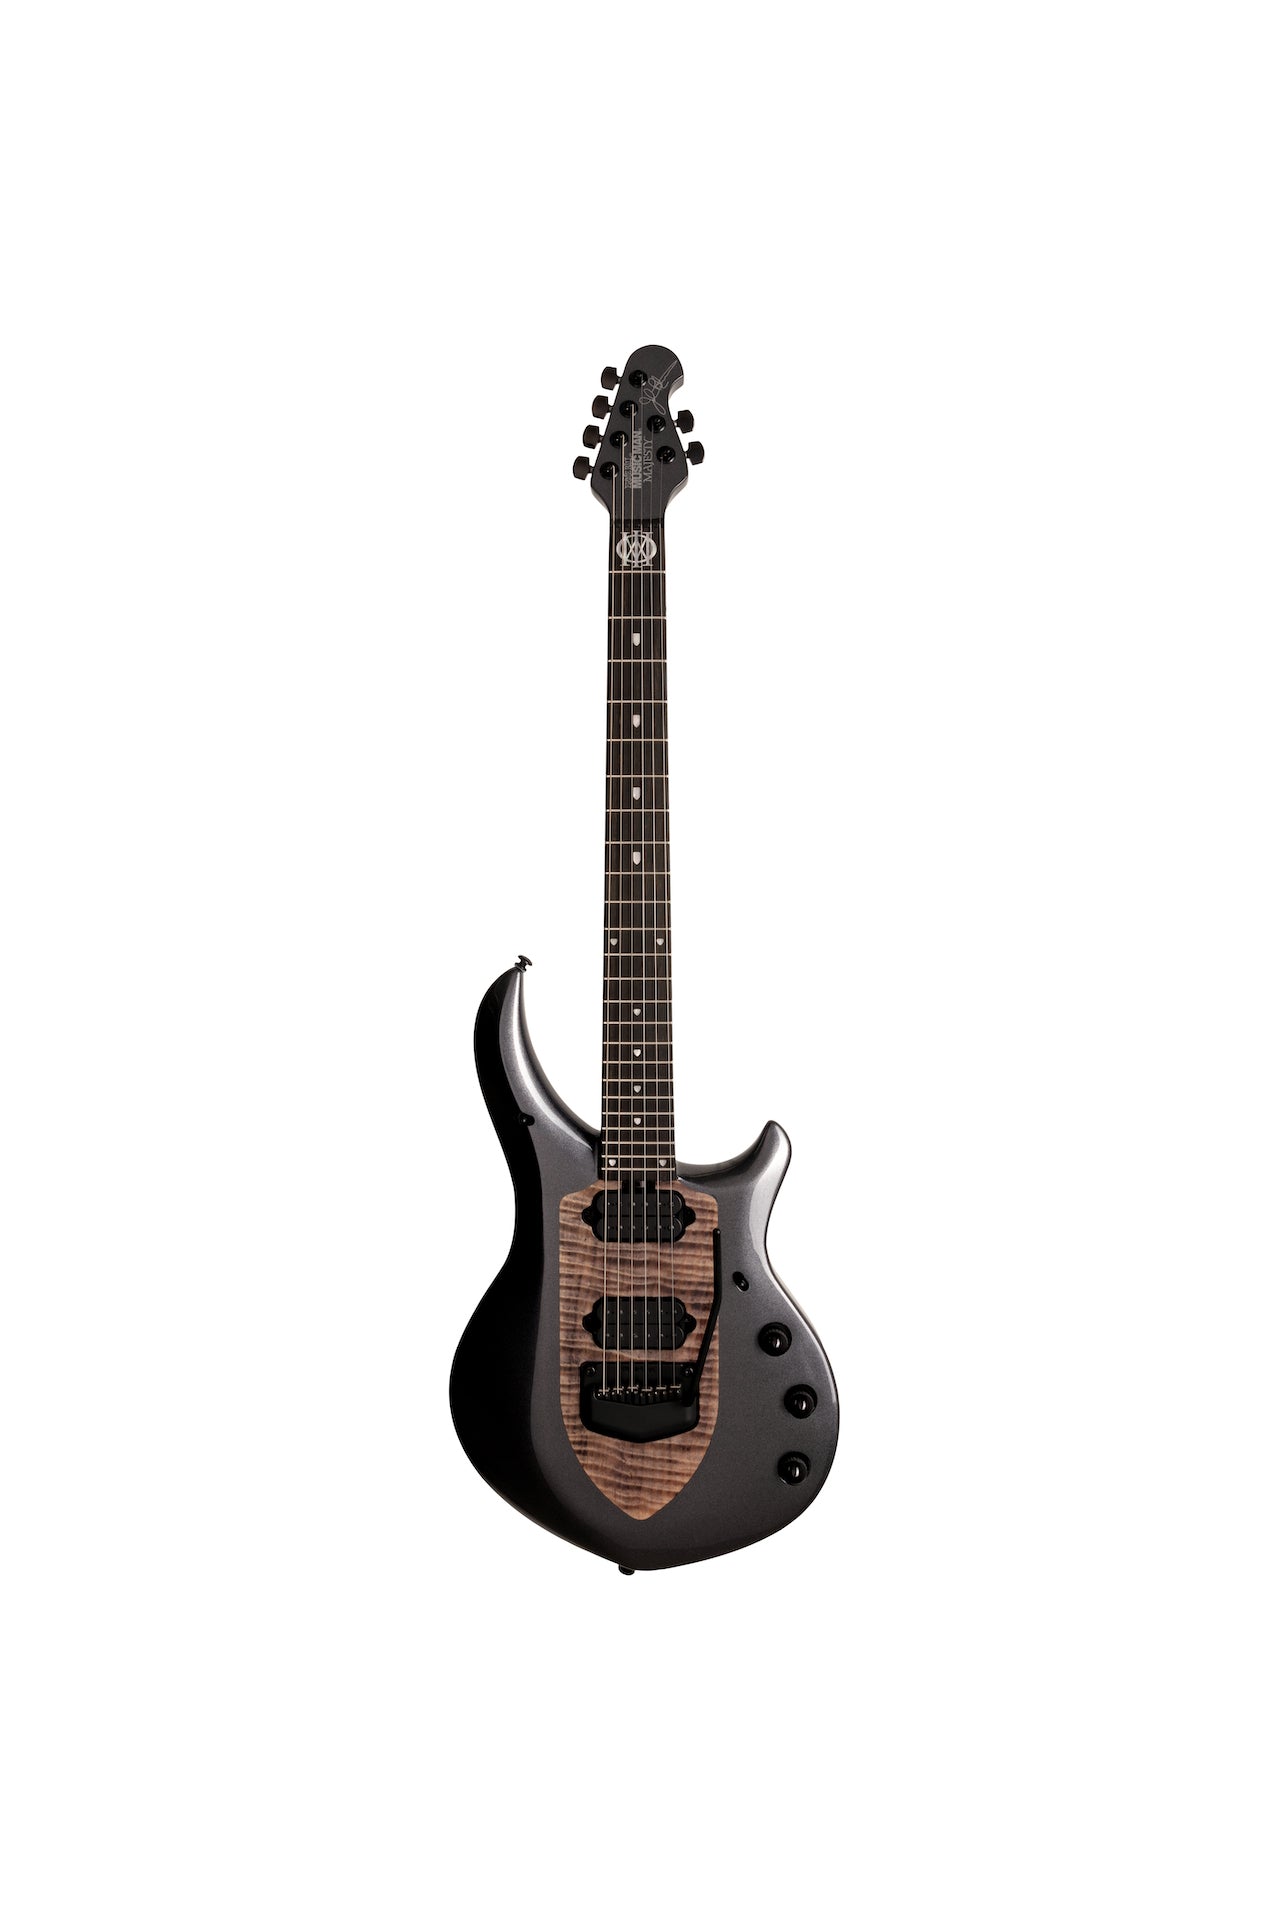 Ernie Ball Music Man Majesty John Petrucci Signature Electric Guitar - Smoked Pear M014778 - HIENDGUITAR   Musicman GUITAR